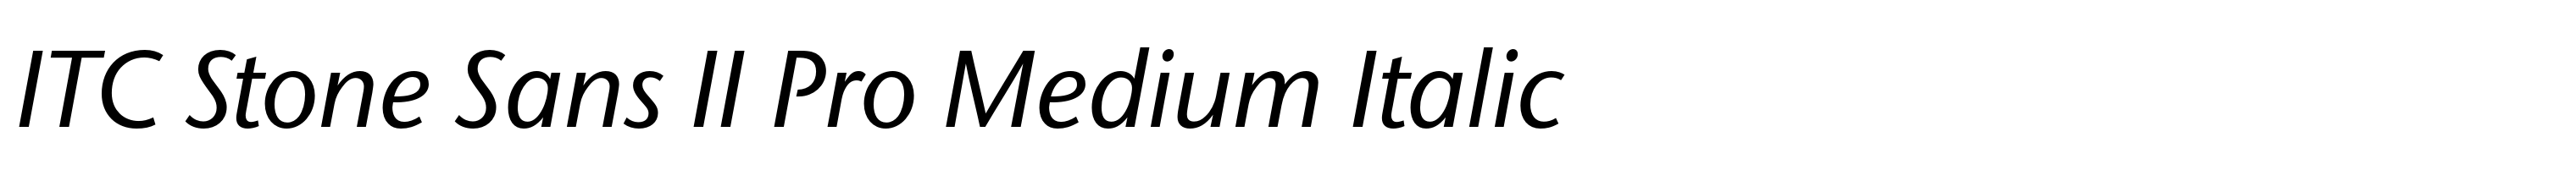 ITC Stone Sans II Pro Medium Italic